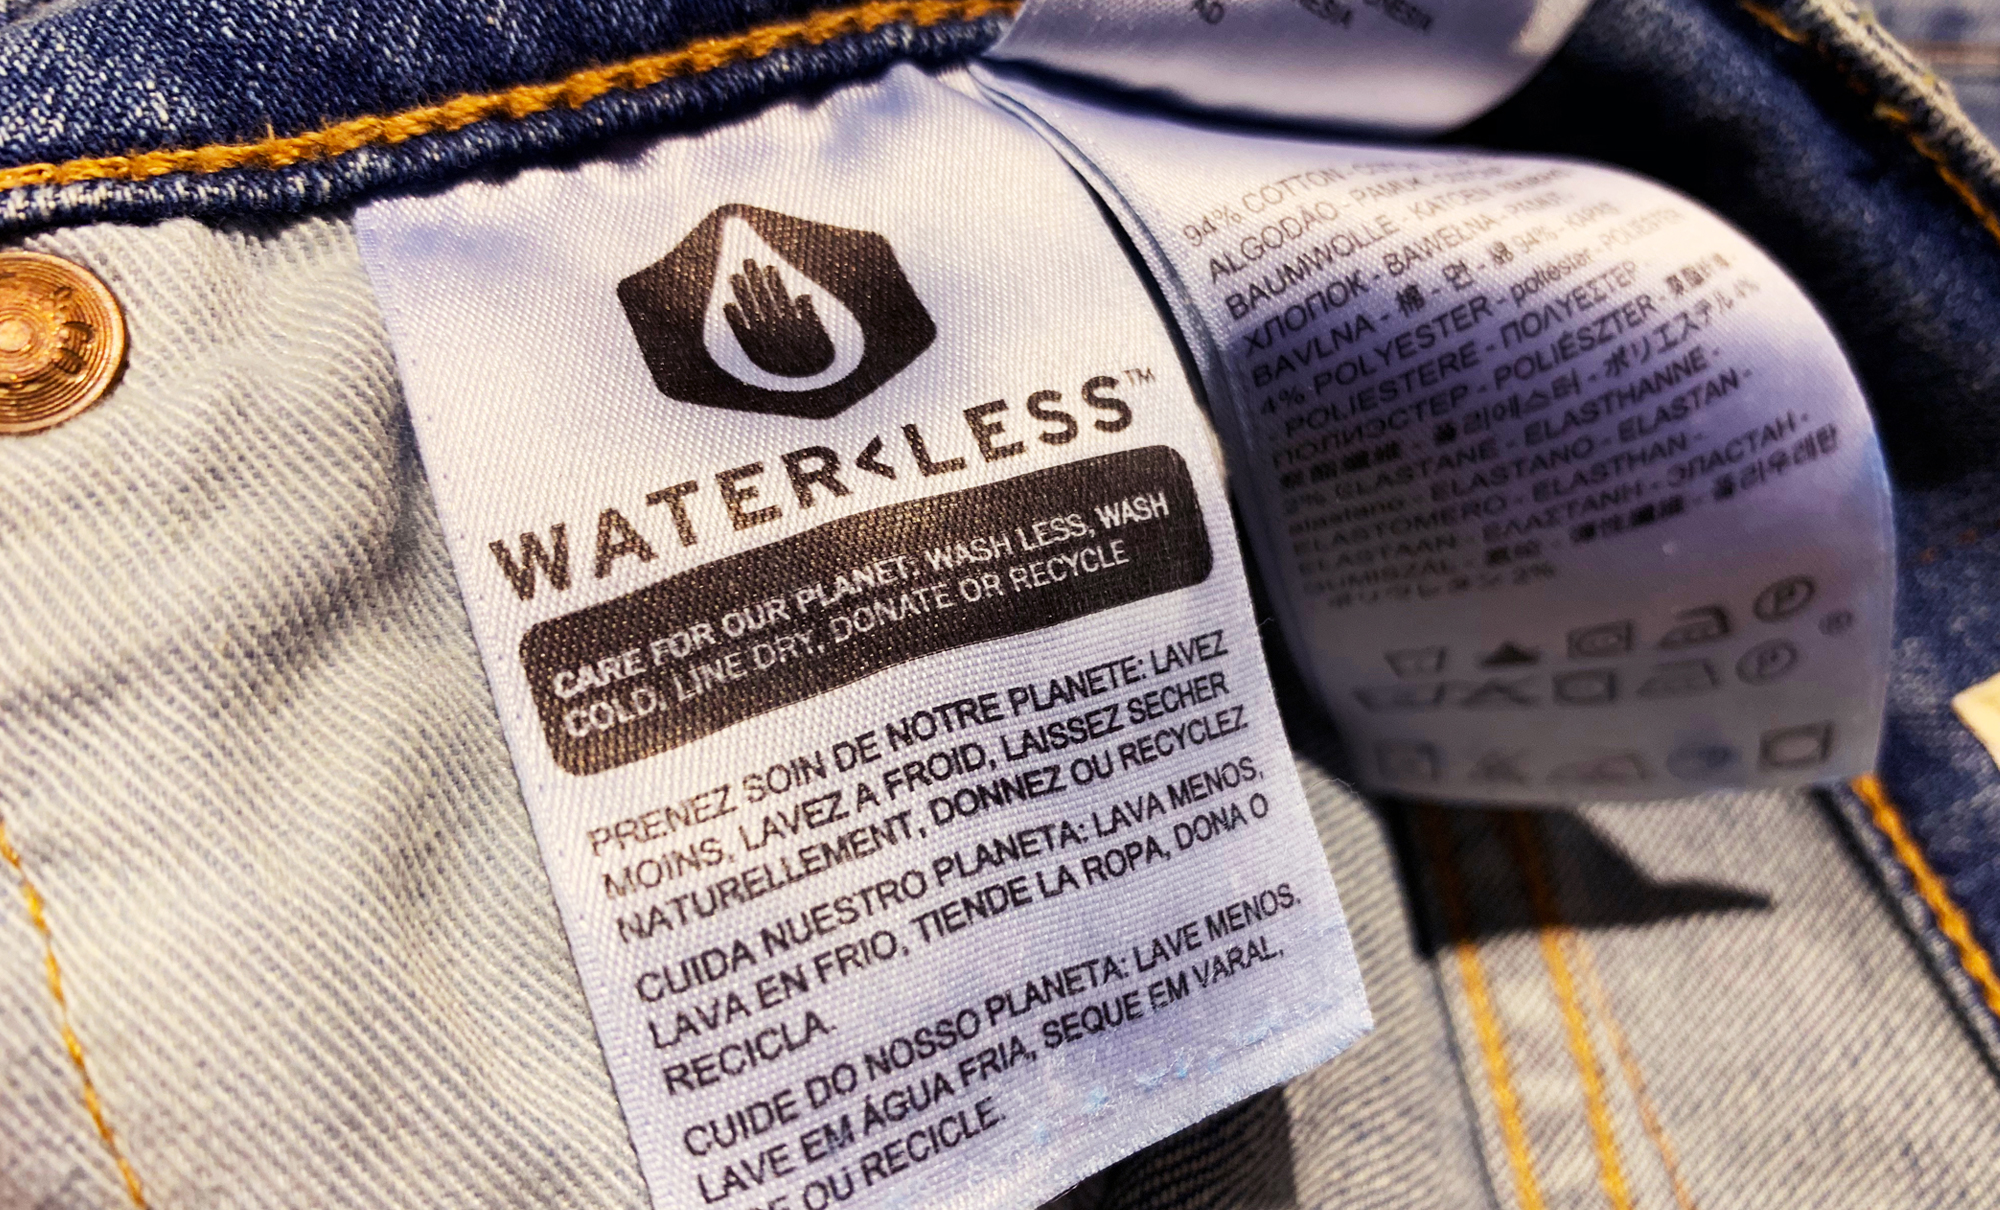 waterless jeans